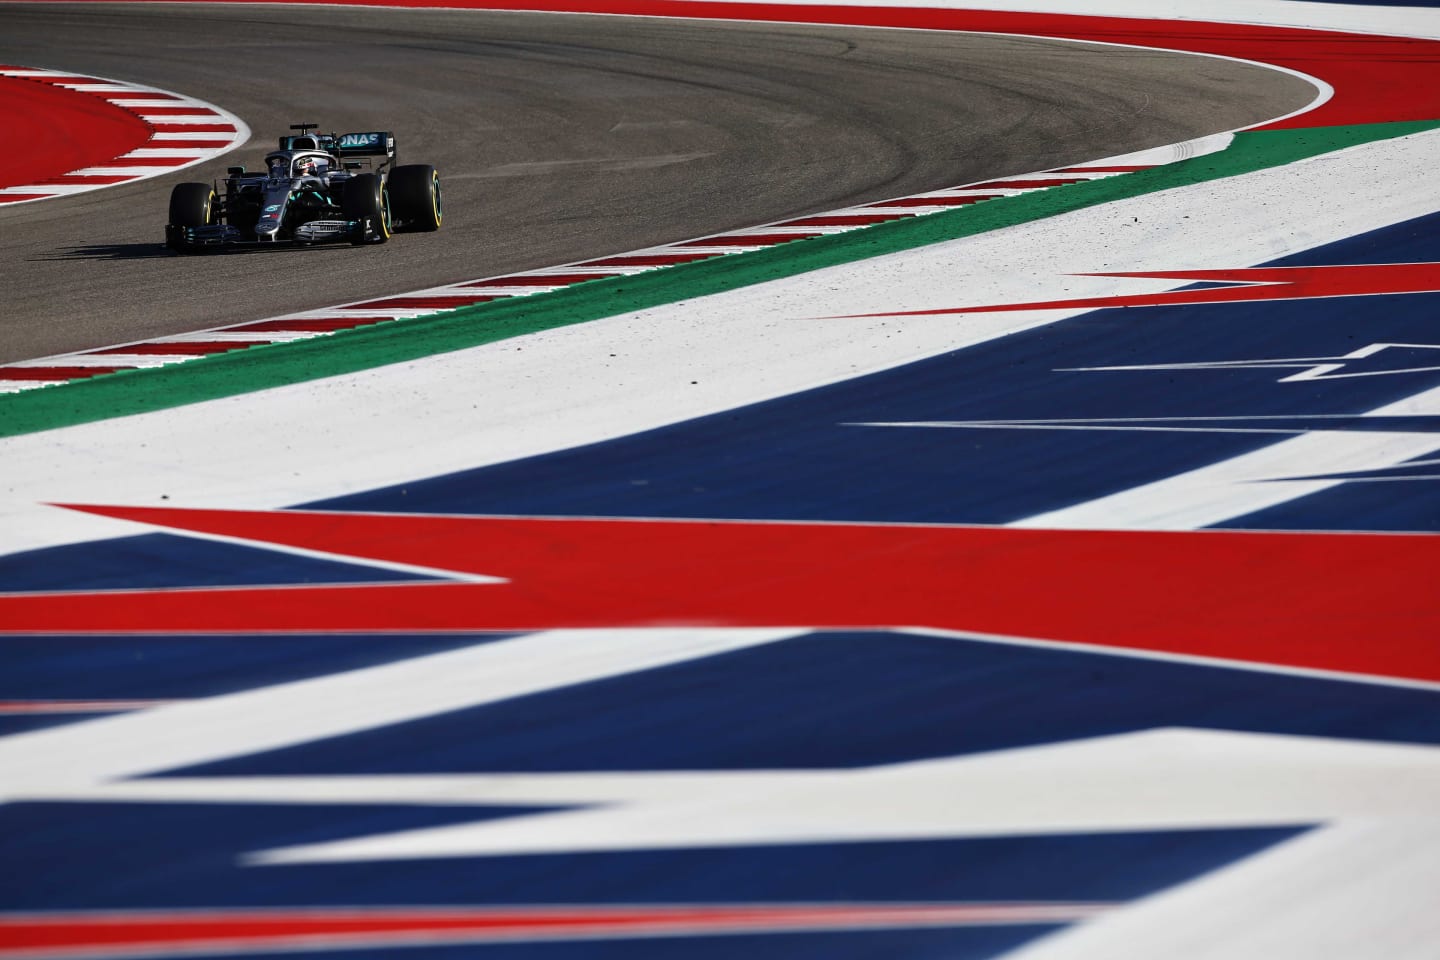 AUSTIN, TEXAS - NOVEMBER 02: Lewis Hamilton of Great Britain driving the (44) Mercedes AMG Petronas